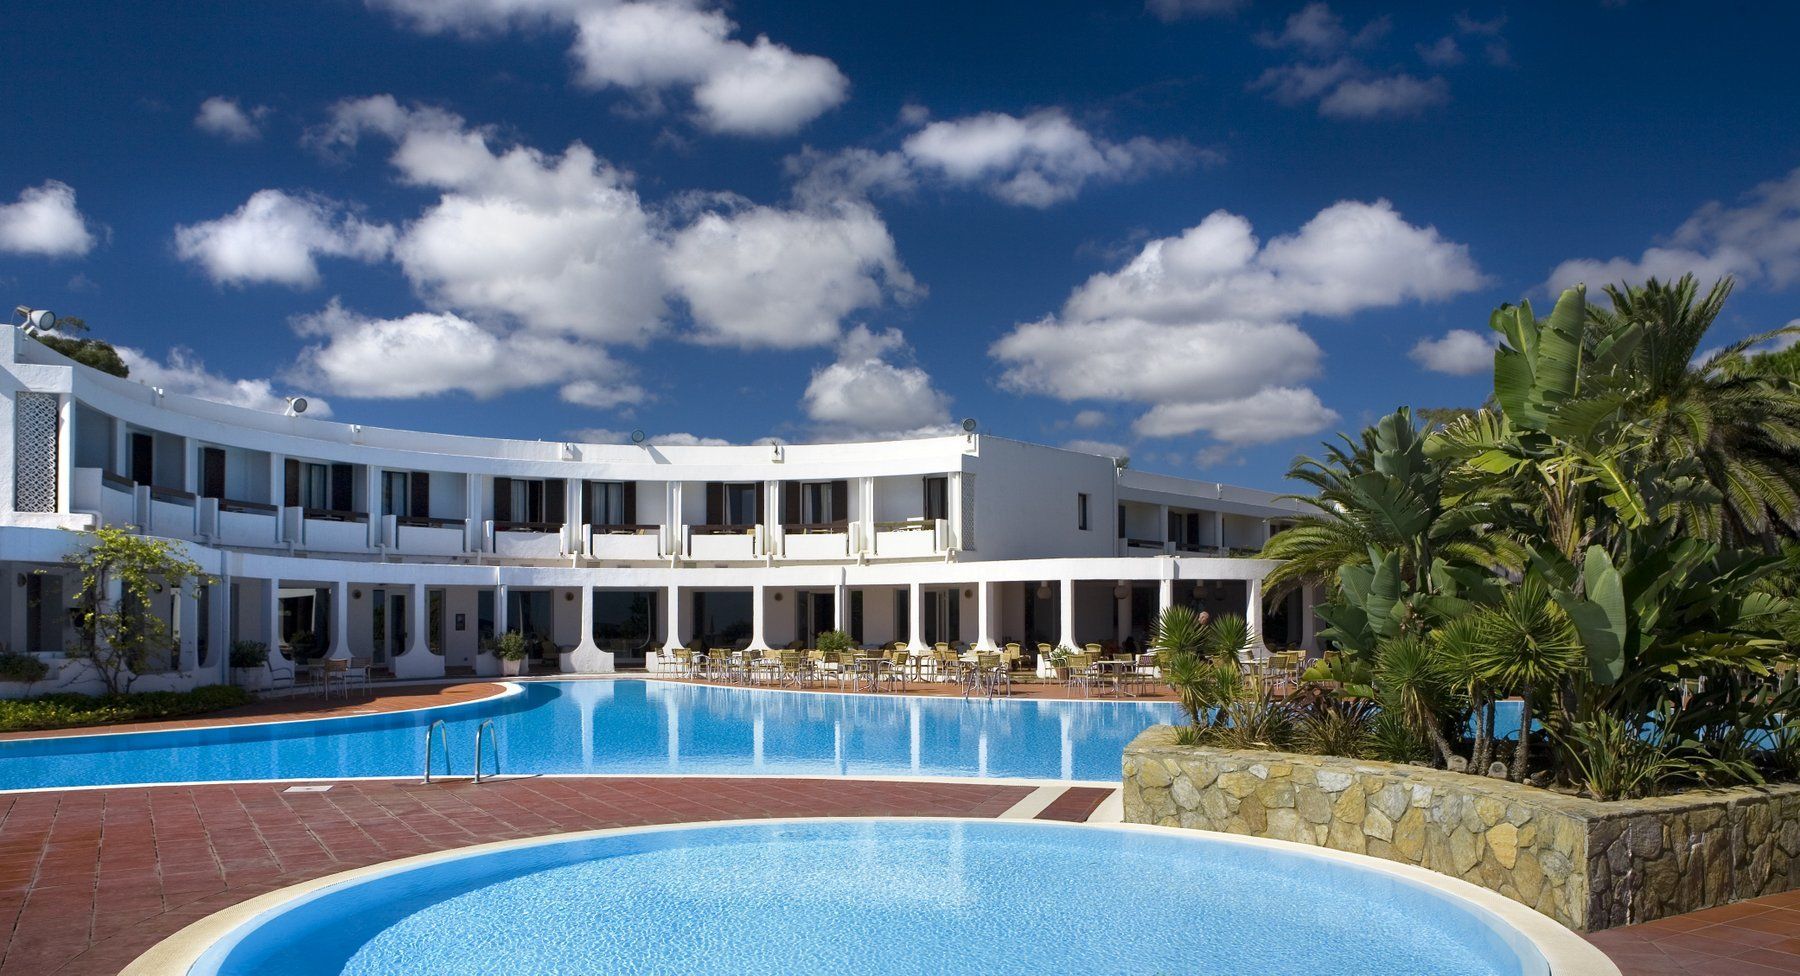 Vacances assurées – Jusqu’à 20% de rabais + Assurance annulation incluse Hotel Flamingo